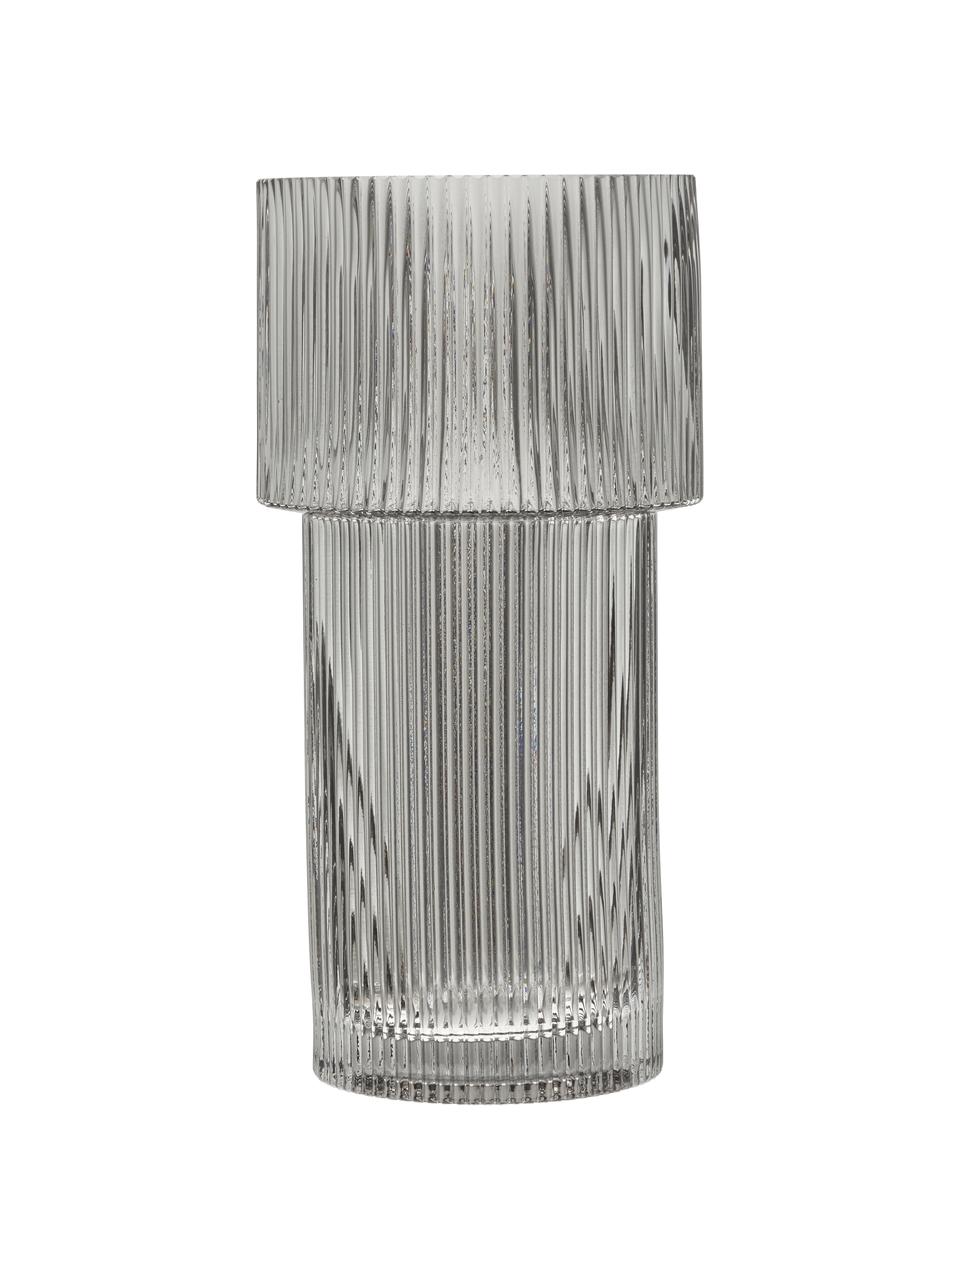 Glas-Vase Lija mit geriffelter Oberfläche in Grau, Glas, Grau, transparent, Ø 14 x H 30 cm